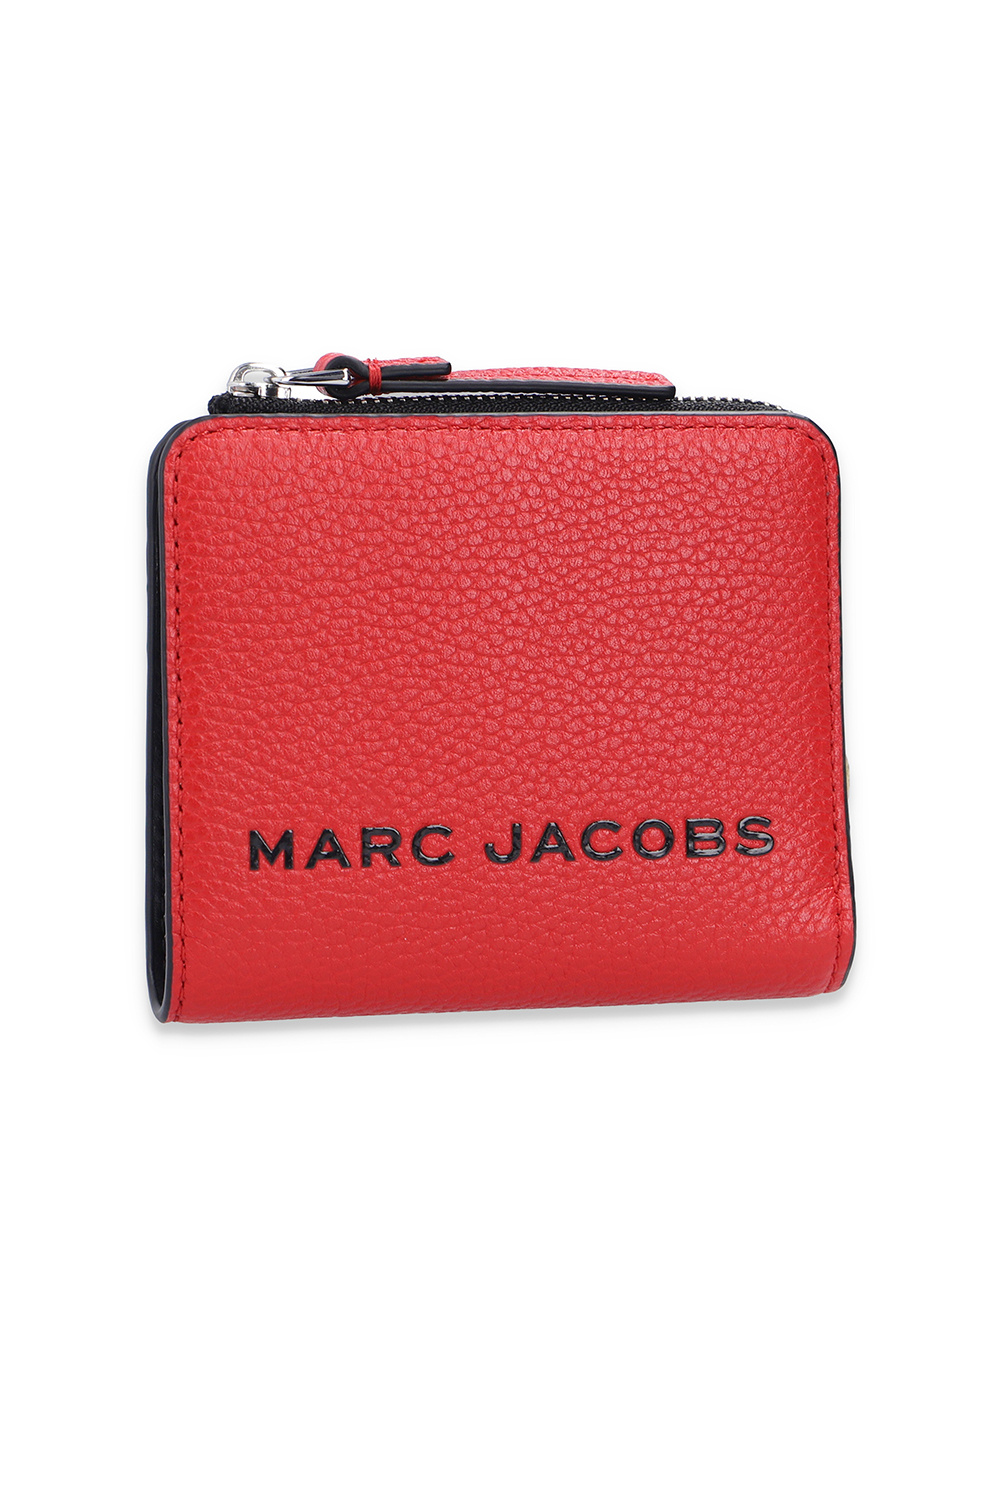 Marc Jacobs Marc Jacobs metallic leather pumps